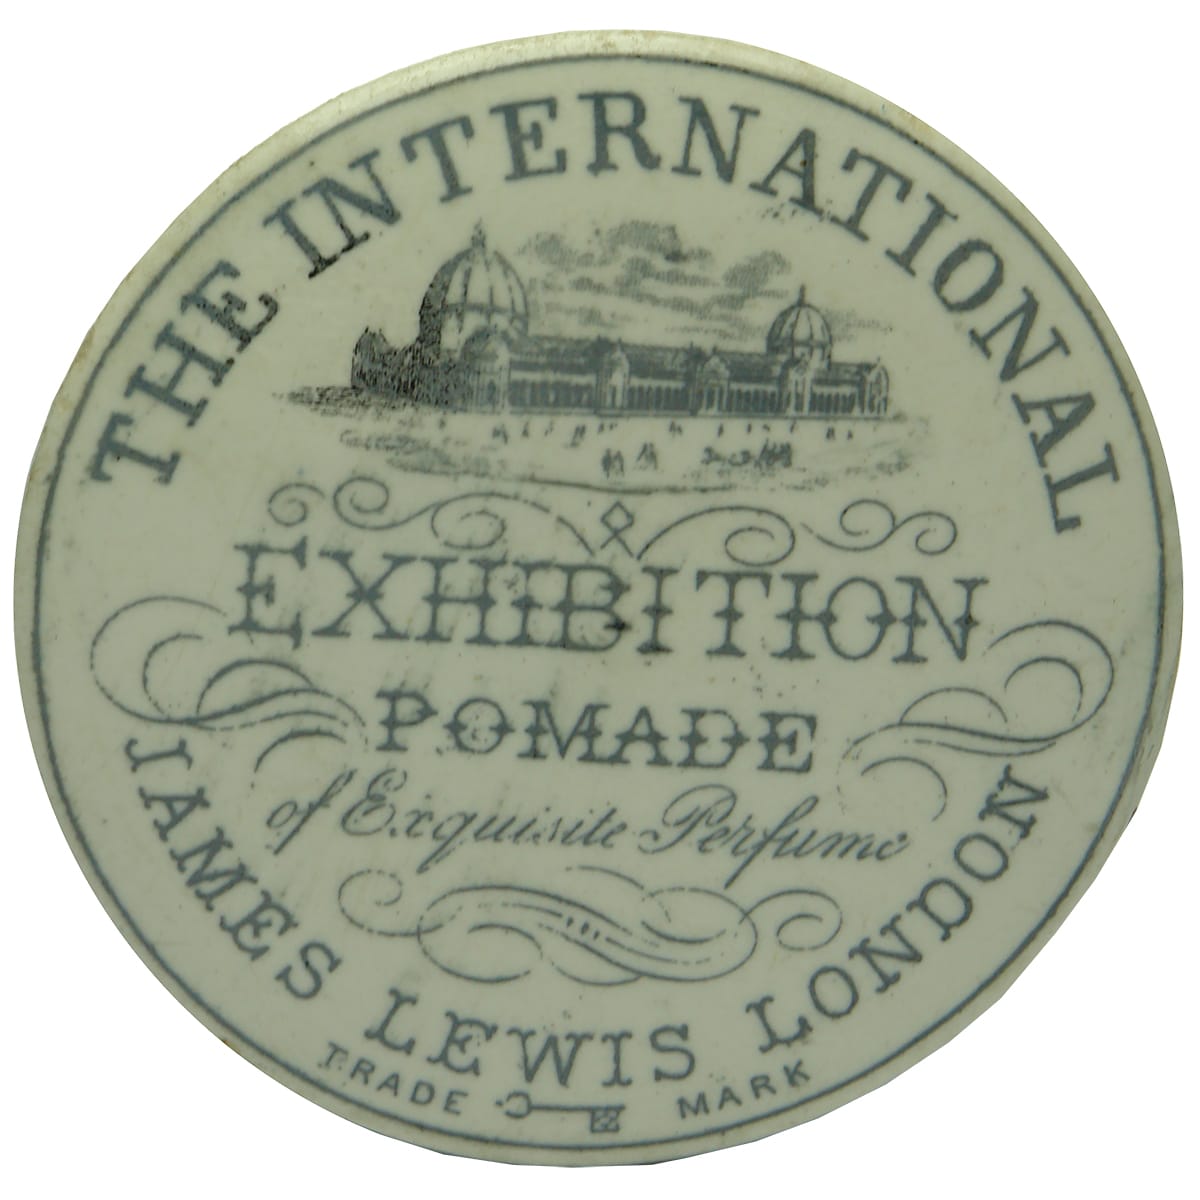 Pot Lid. James Lewis, London. The International Exhibition Pomade. Black & White.